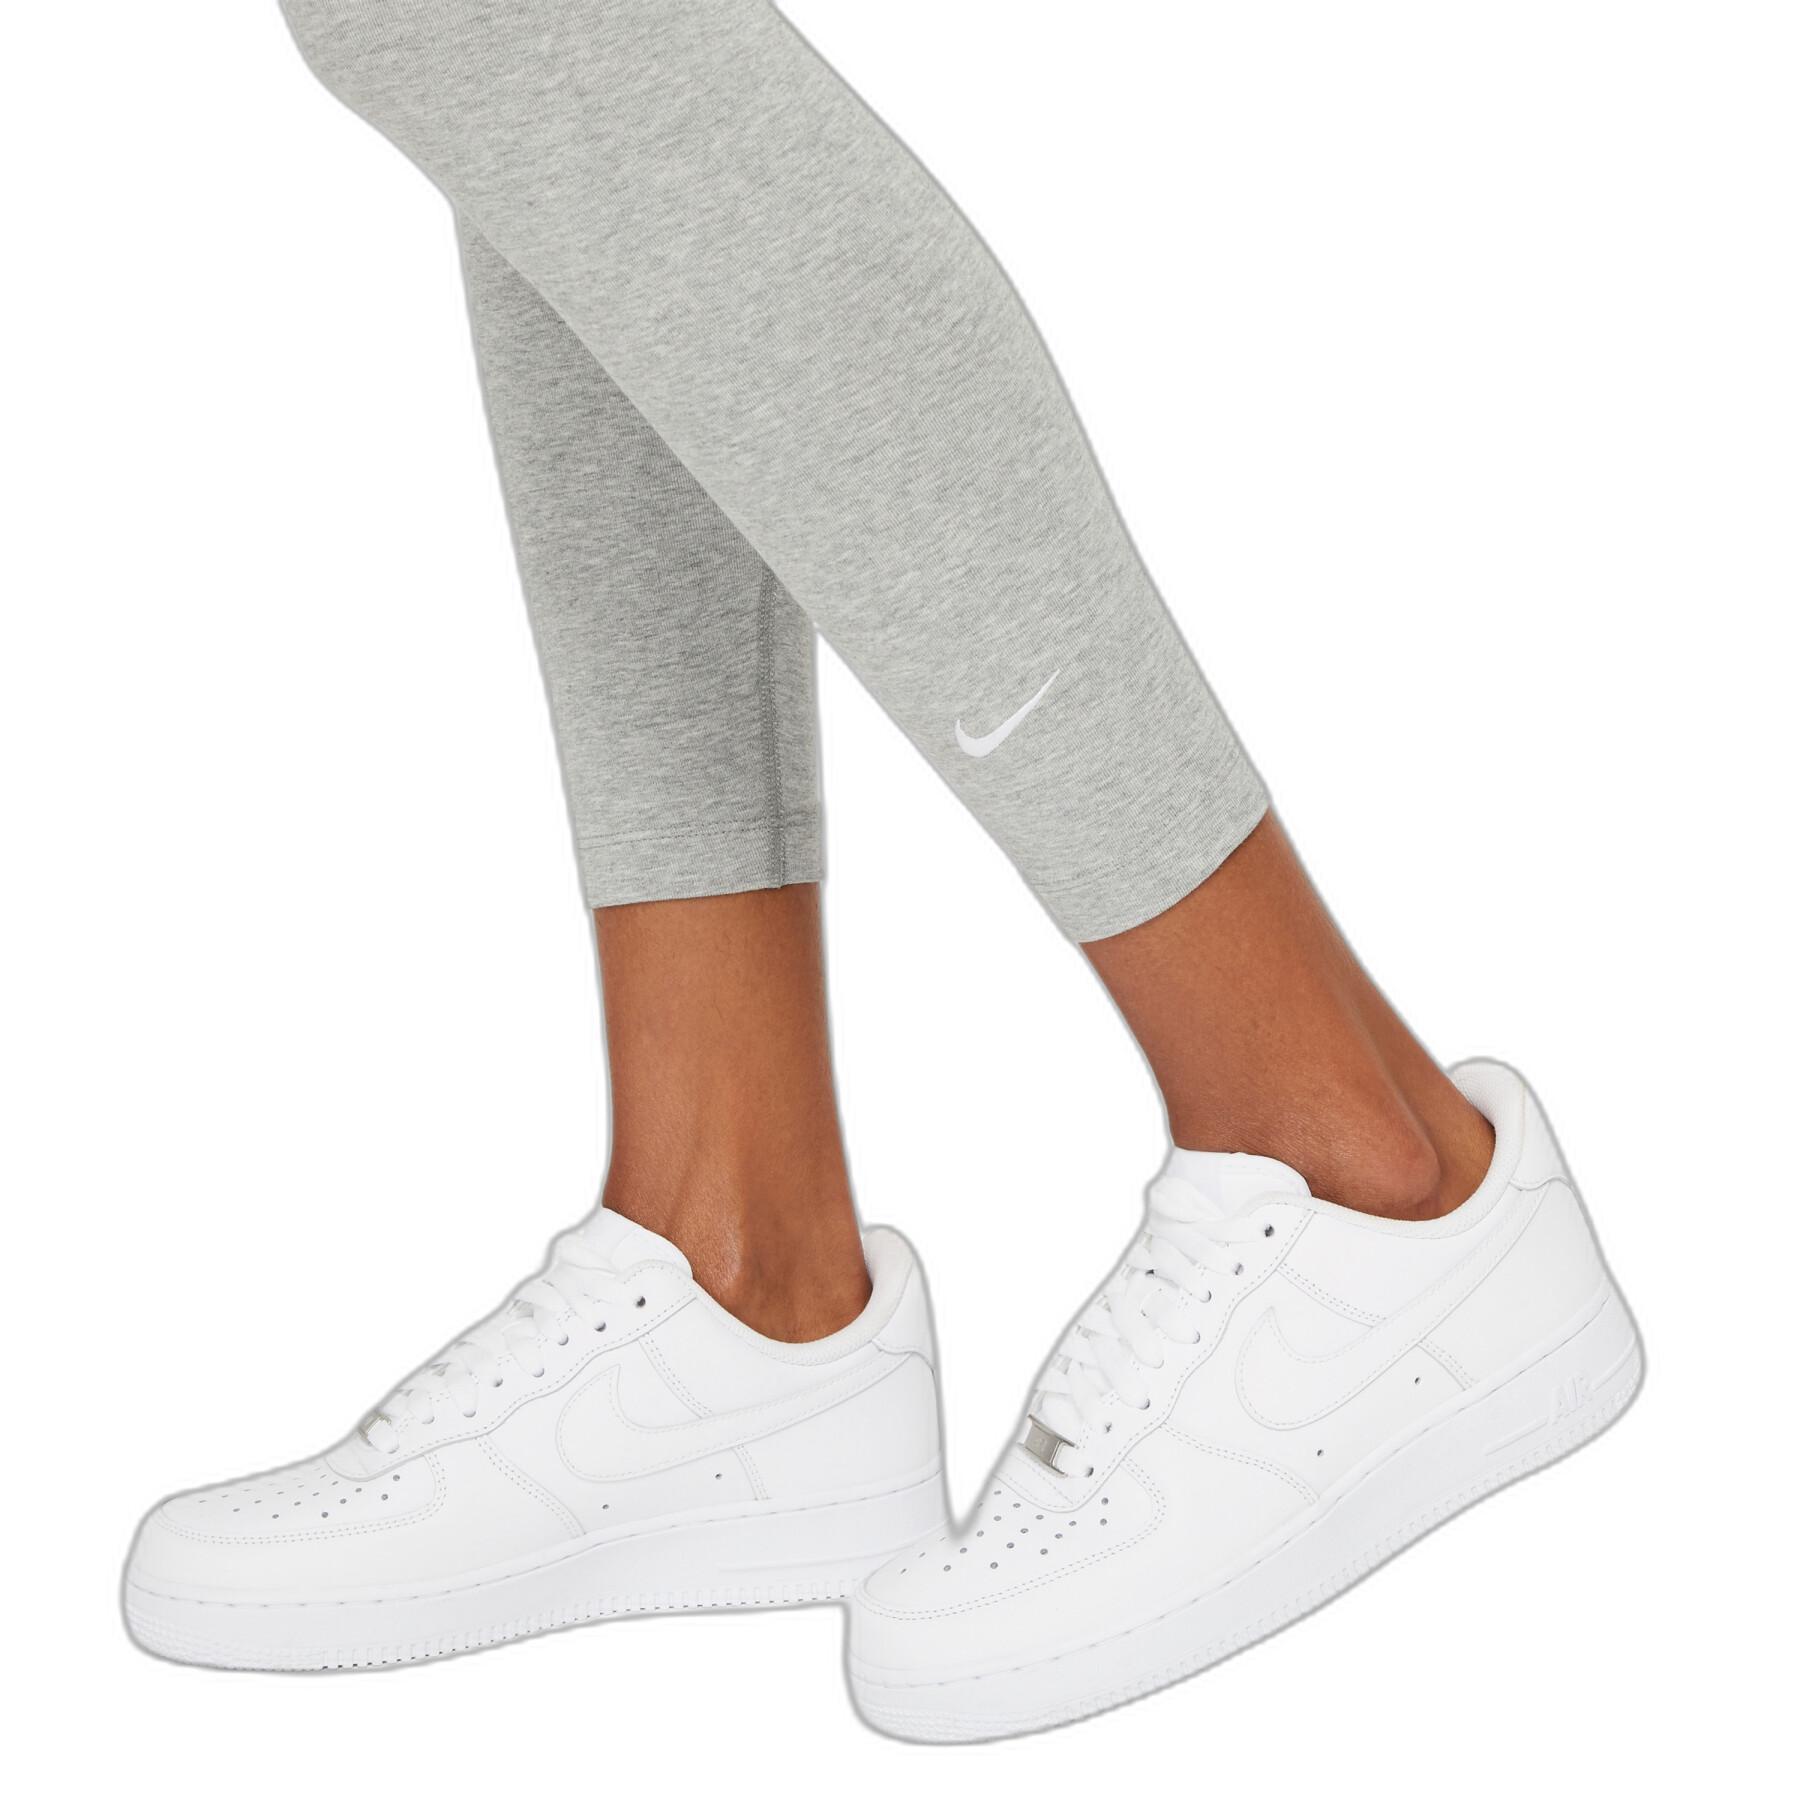 Leggings da donna Nike Sportswear Essential